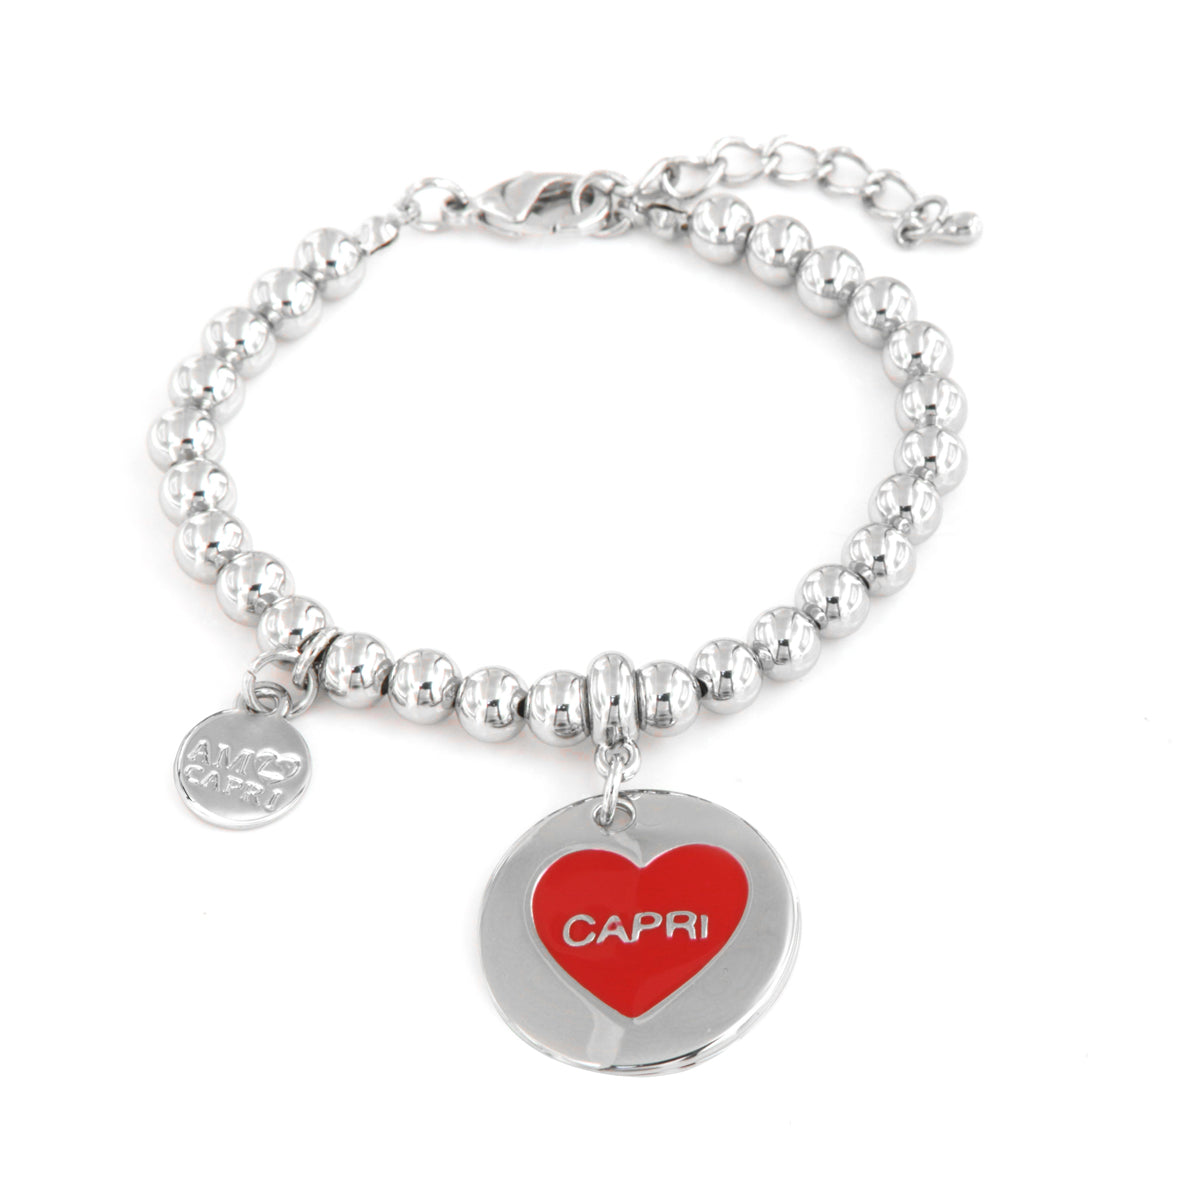 Metal bracelet spheres, with Capri medallion in the heart, in red enamel